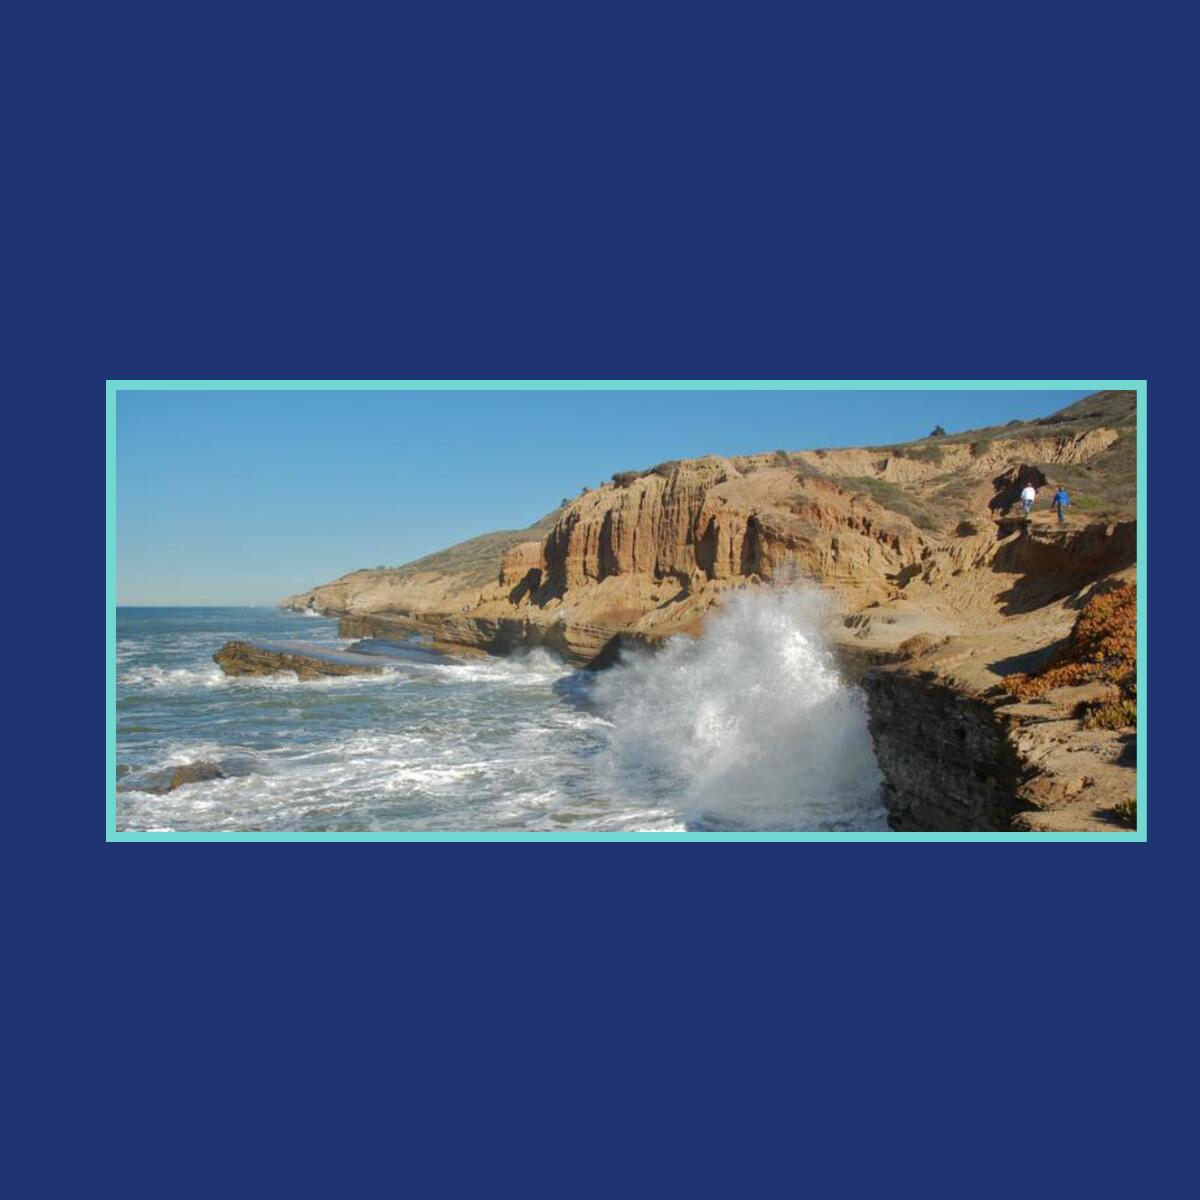 An image of ocean waves crashing into cliffs.